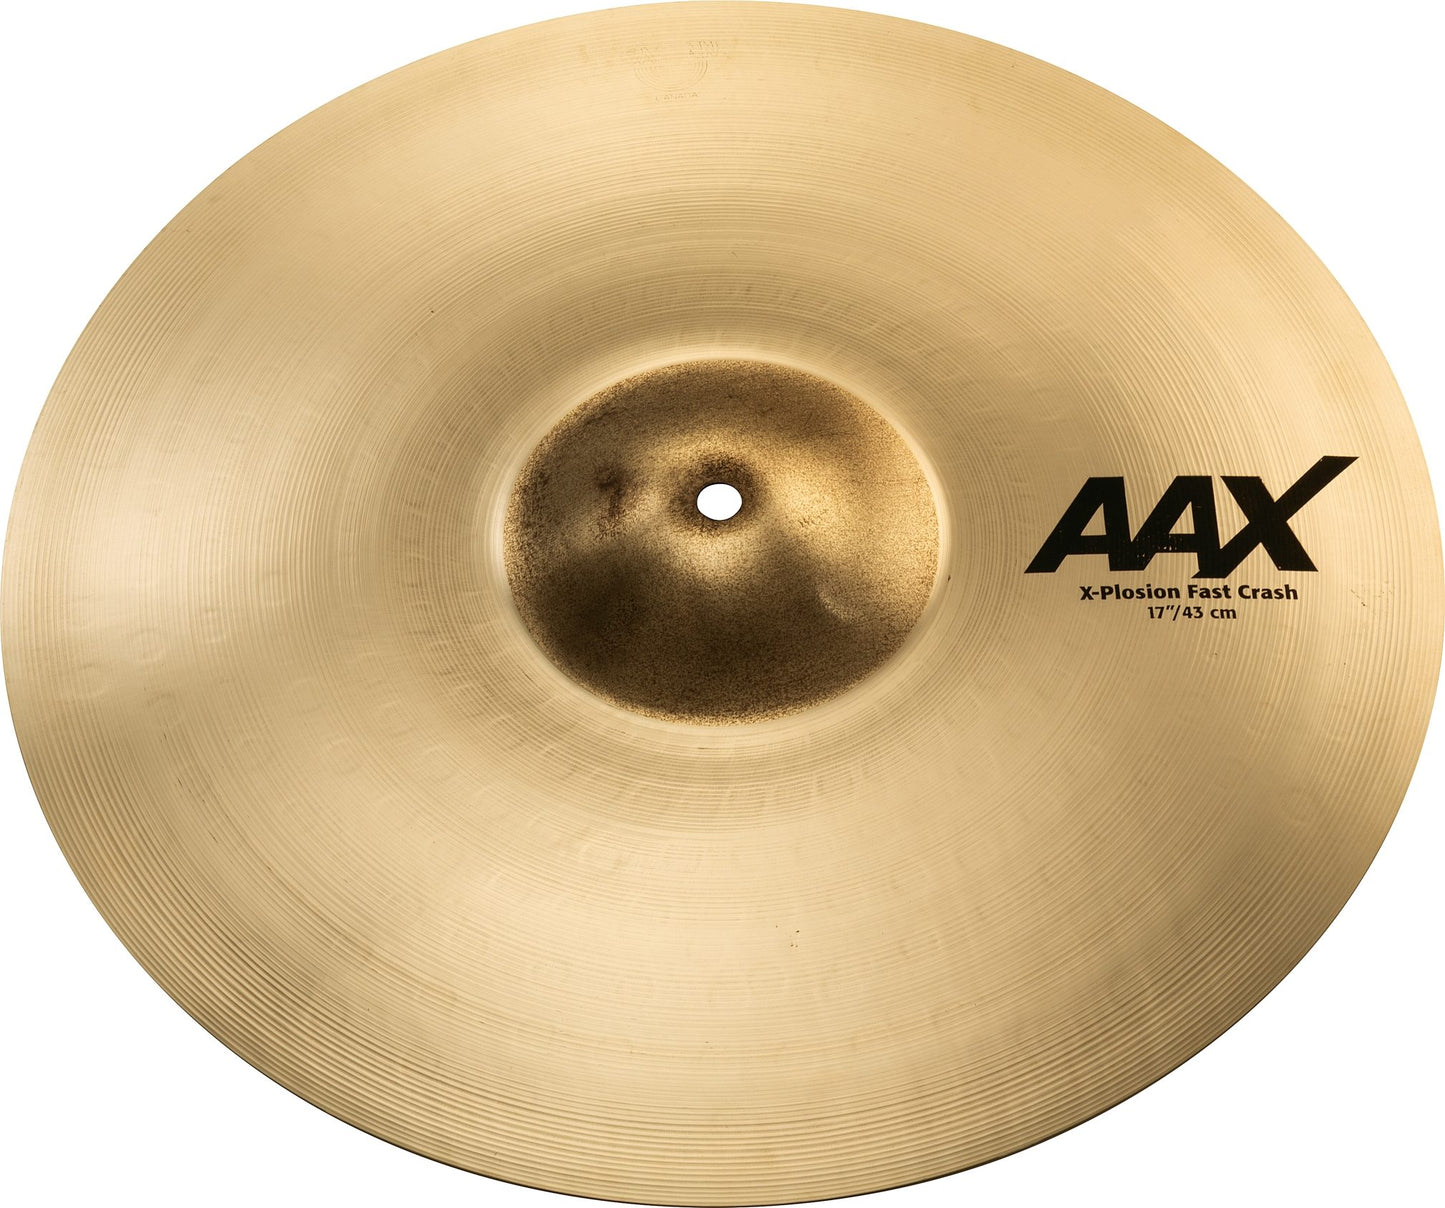 Sabian AAX X-Plosion Fast Crash Cymbal, 17 Inch